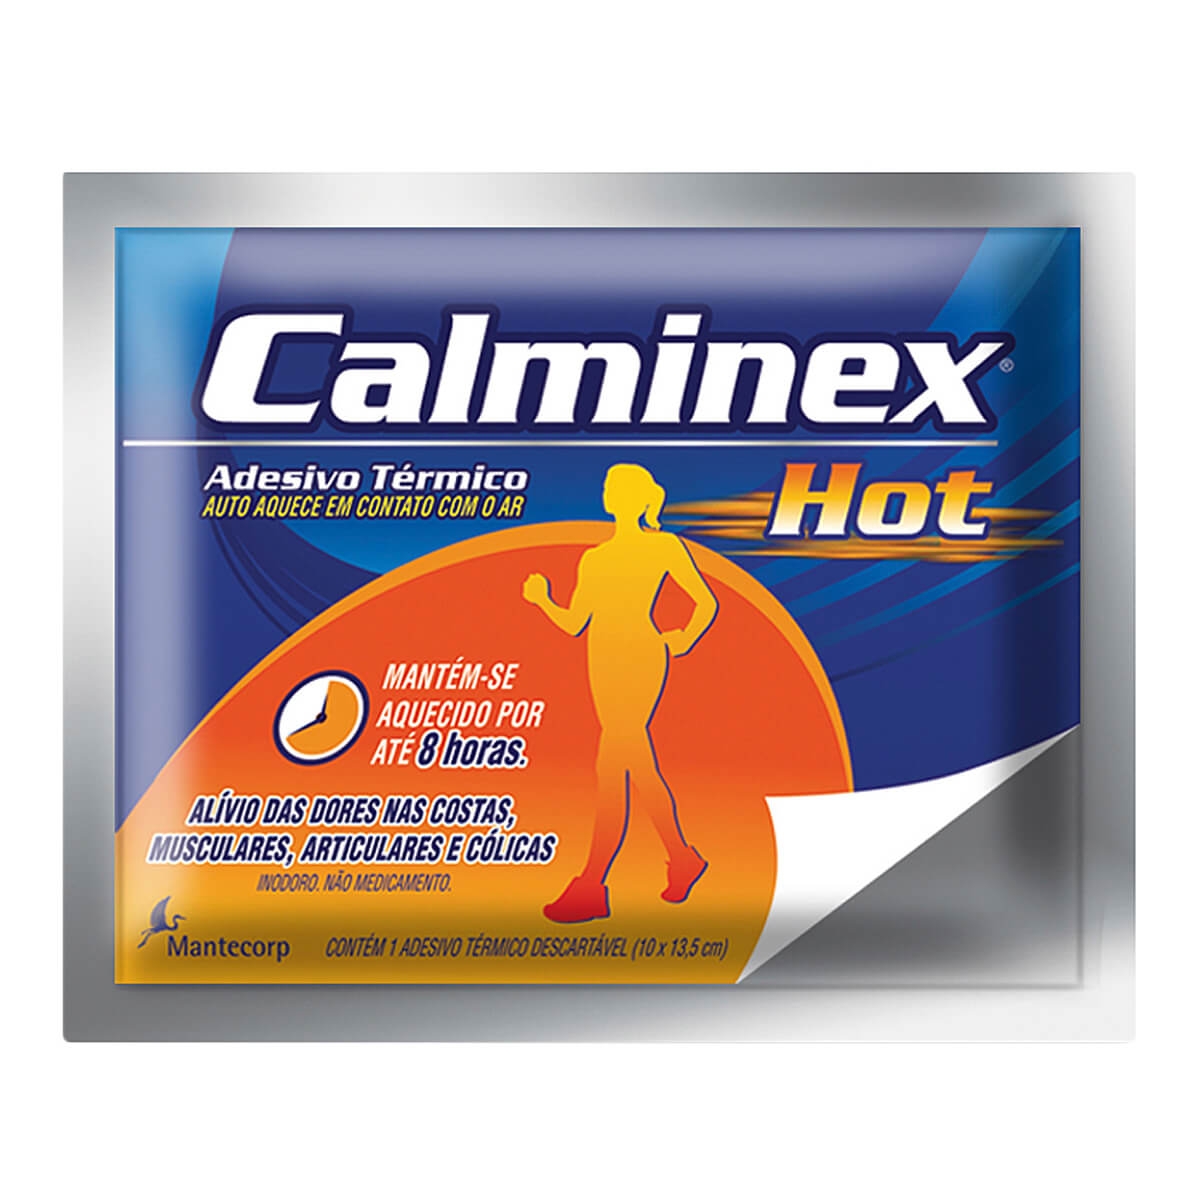 Almofada Térmica Calminex Hot Hypera 48,1g